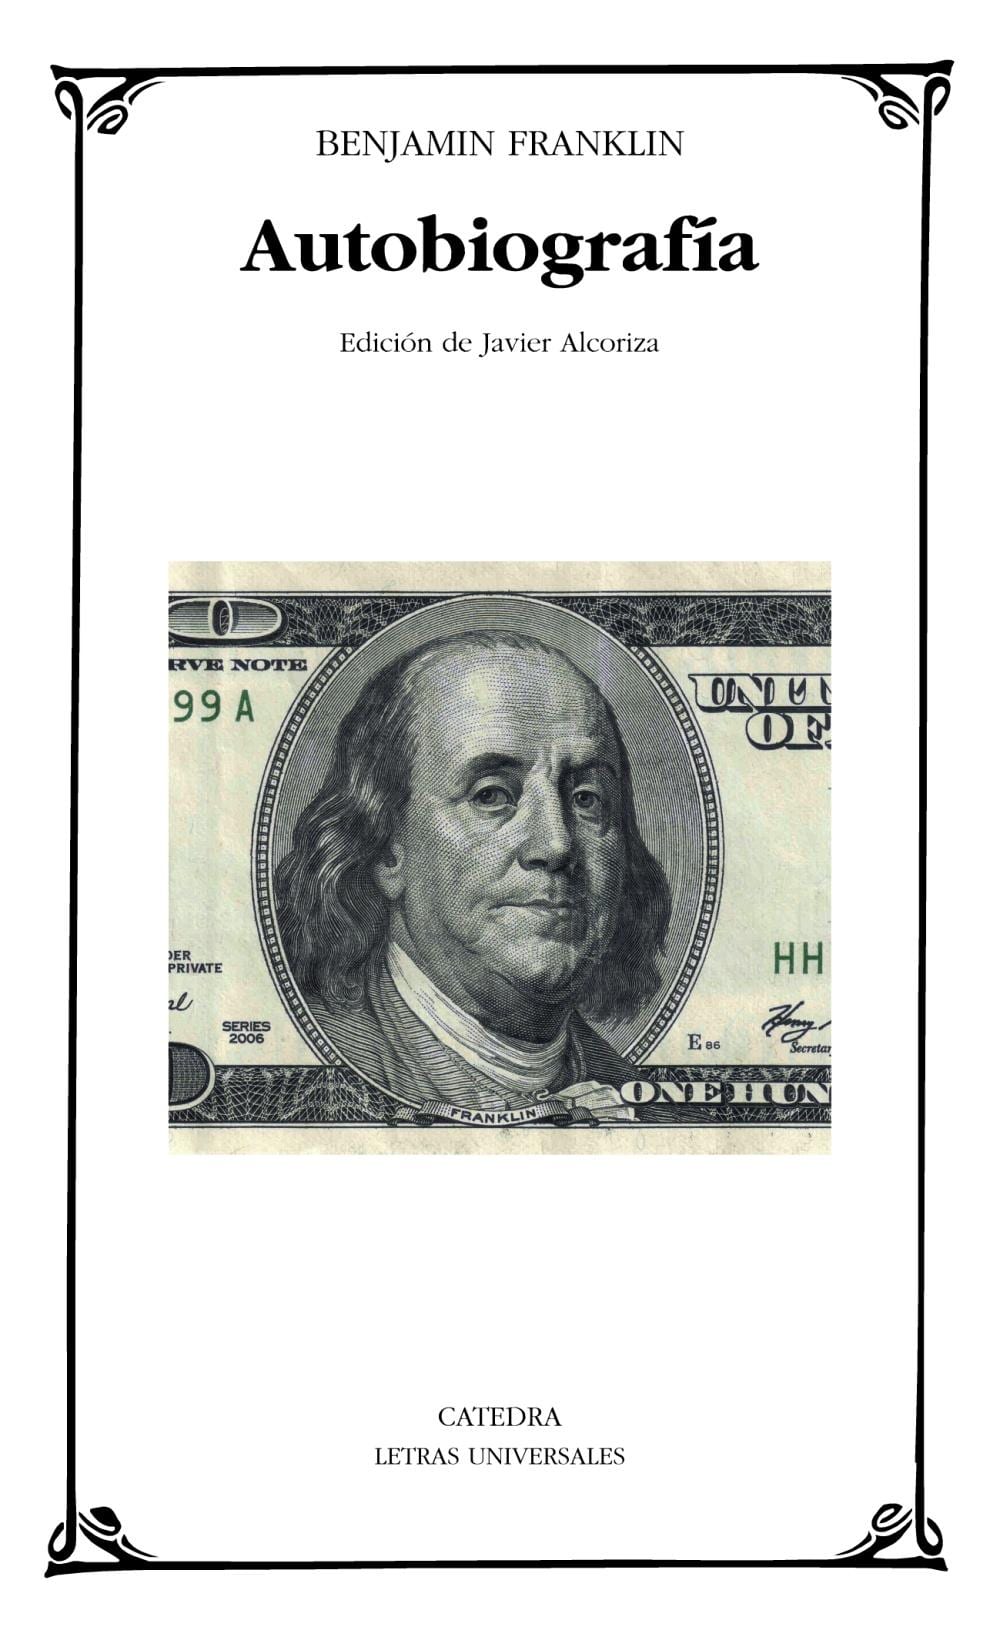 La autobiografia de Benjamin Franklin